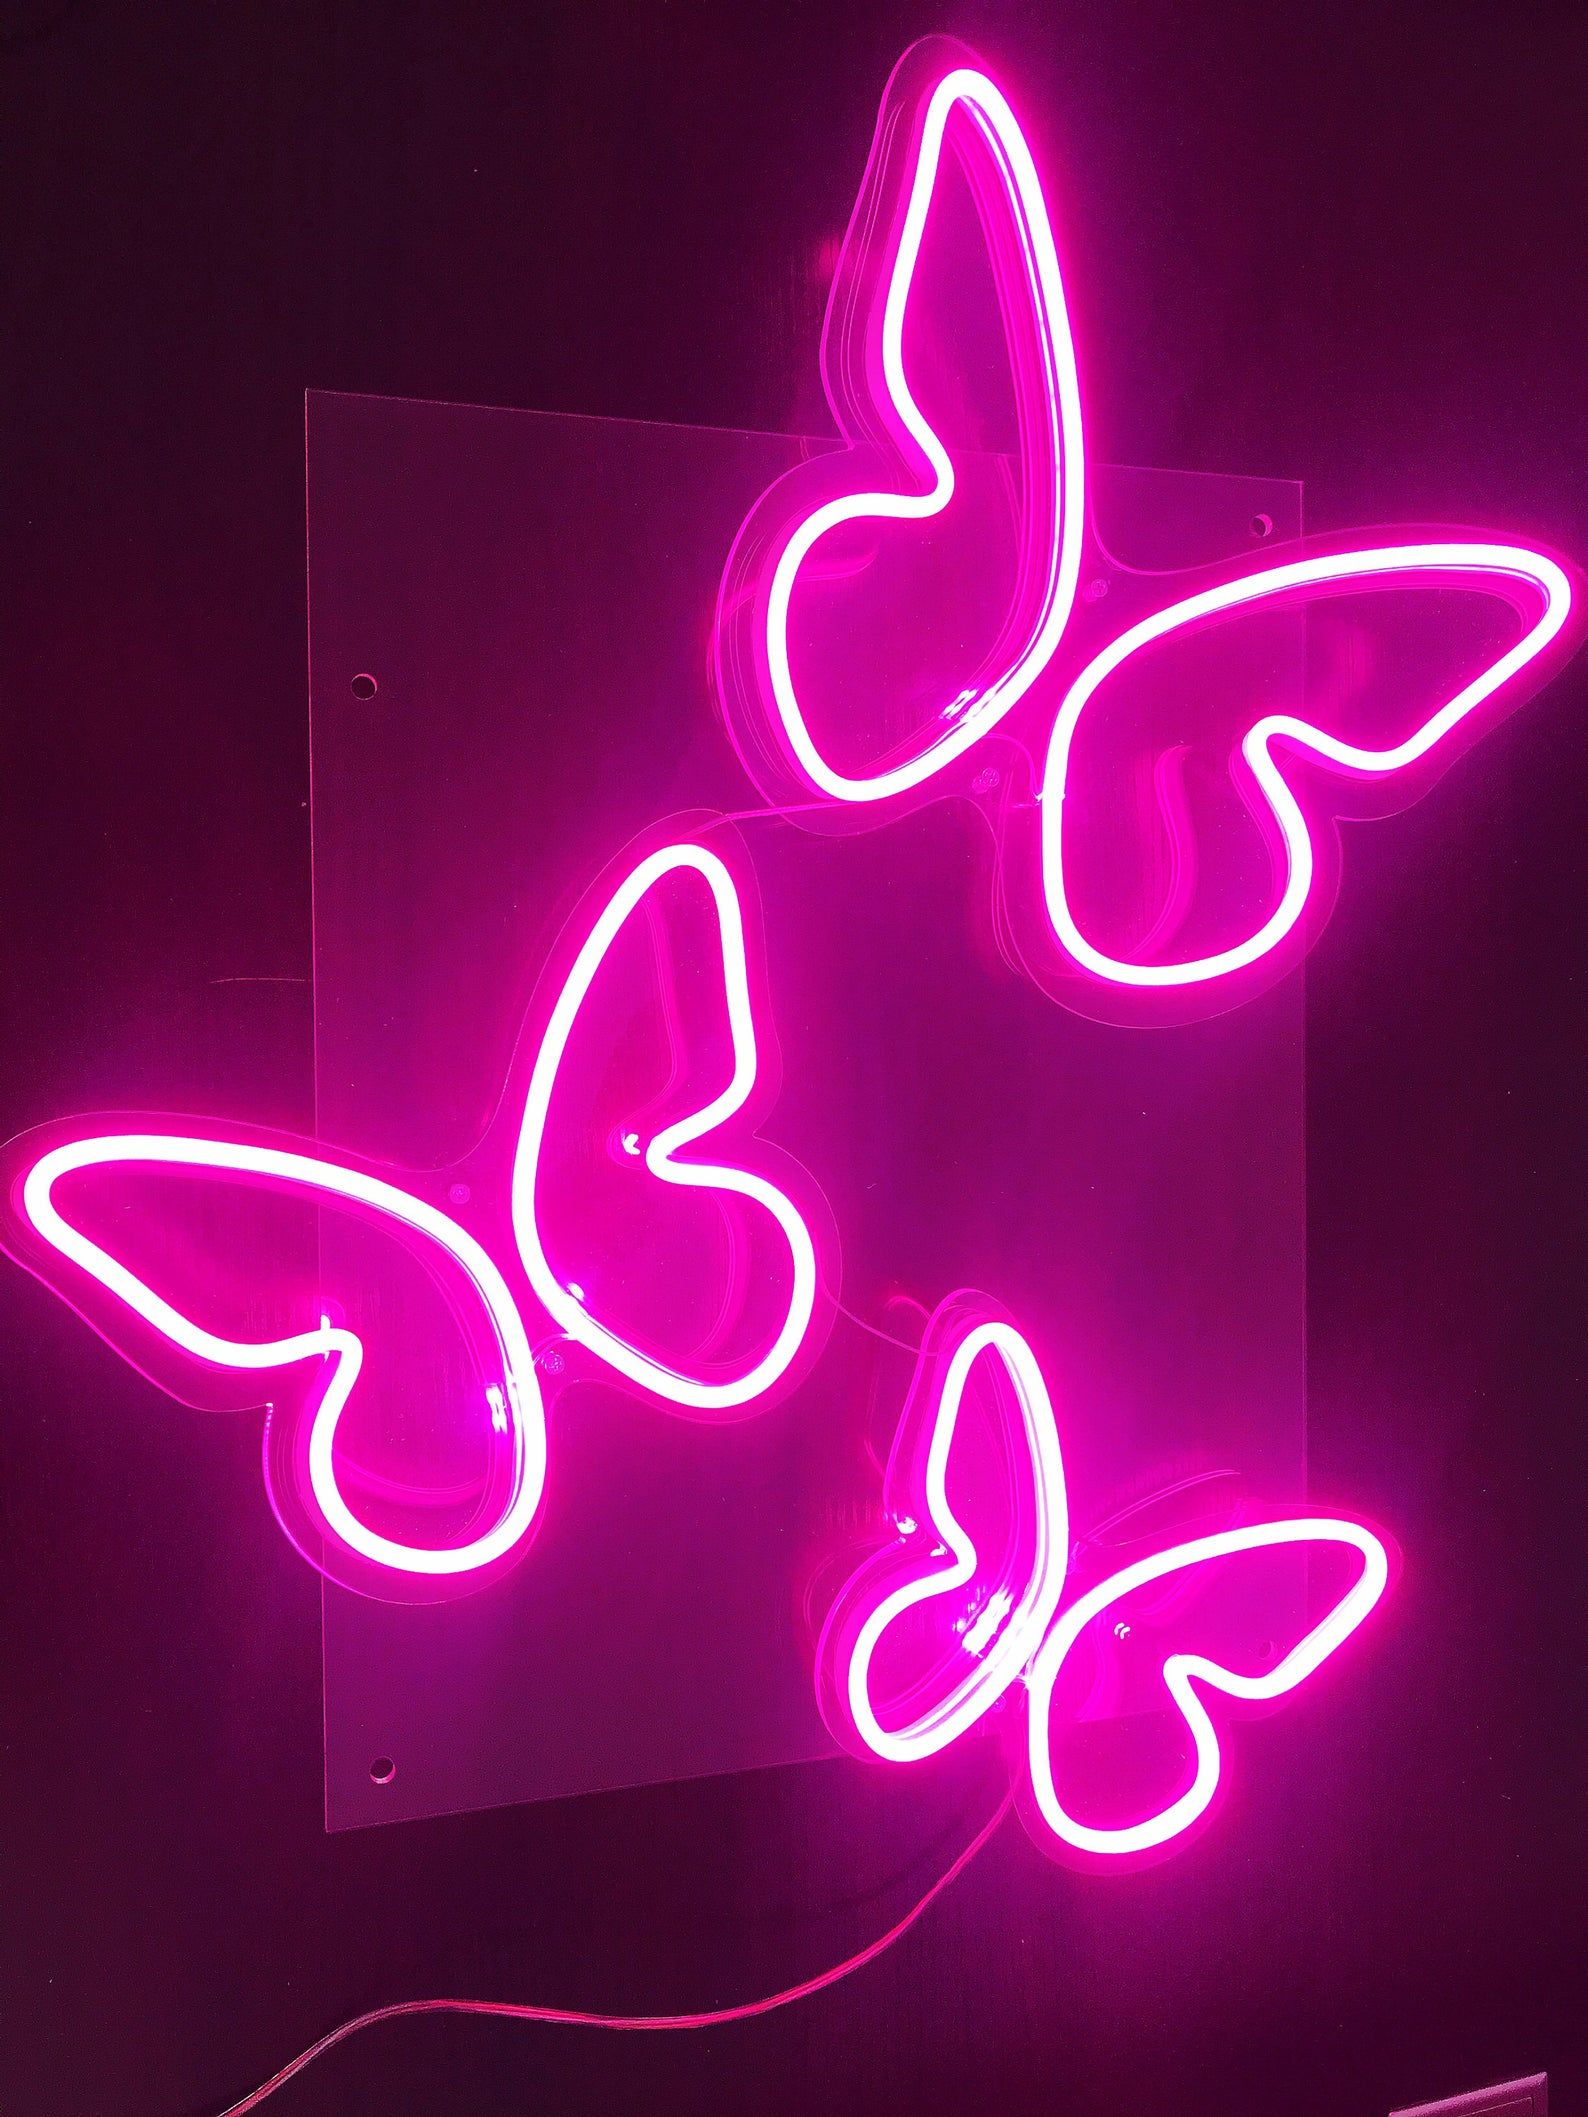 22+] Neon Light Aesthetic Wallpapers - WallpaperSafari